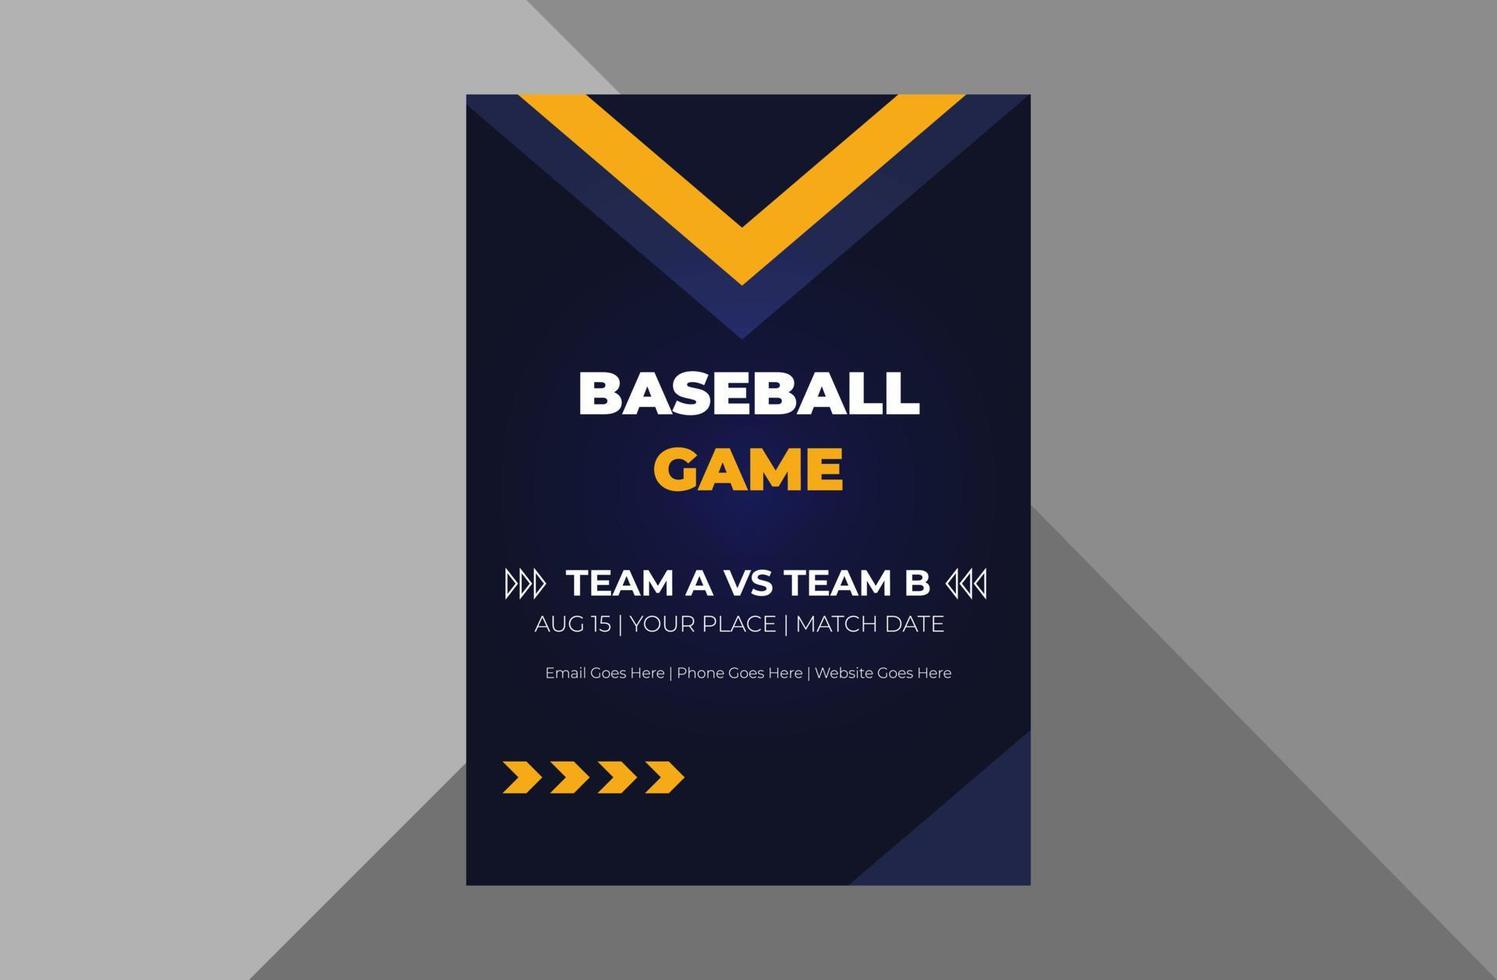 Baseball-Turnier-Flyer-Design-Vorlage. Baseball-Sport-Event-Promotion-Flyer-Design. A4-Vorlage, Broschürendesign, Cover, Flyer, Poster, druckfertig vektor